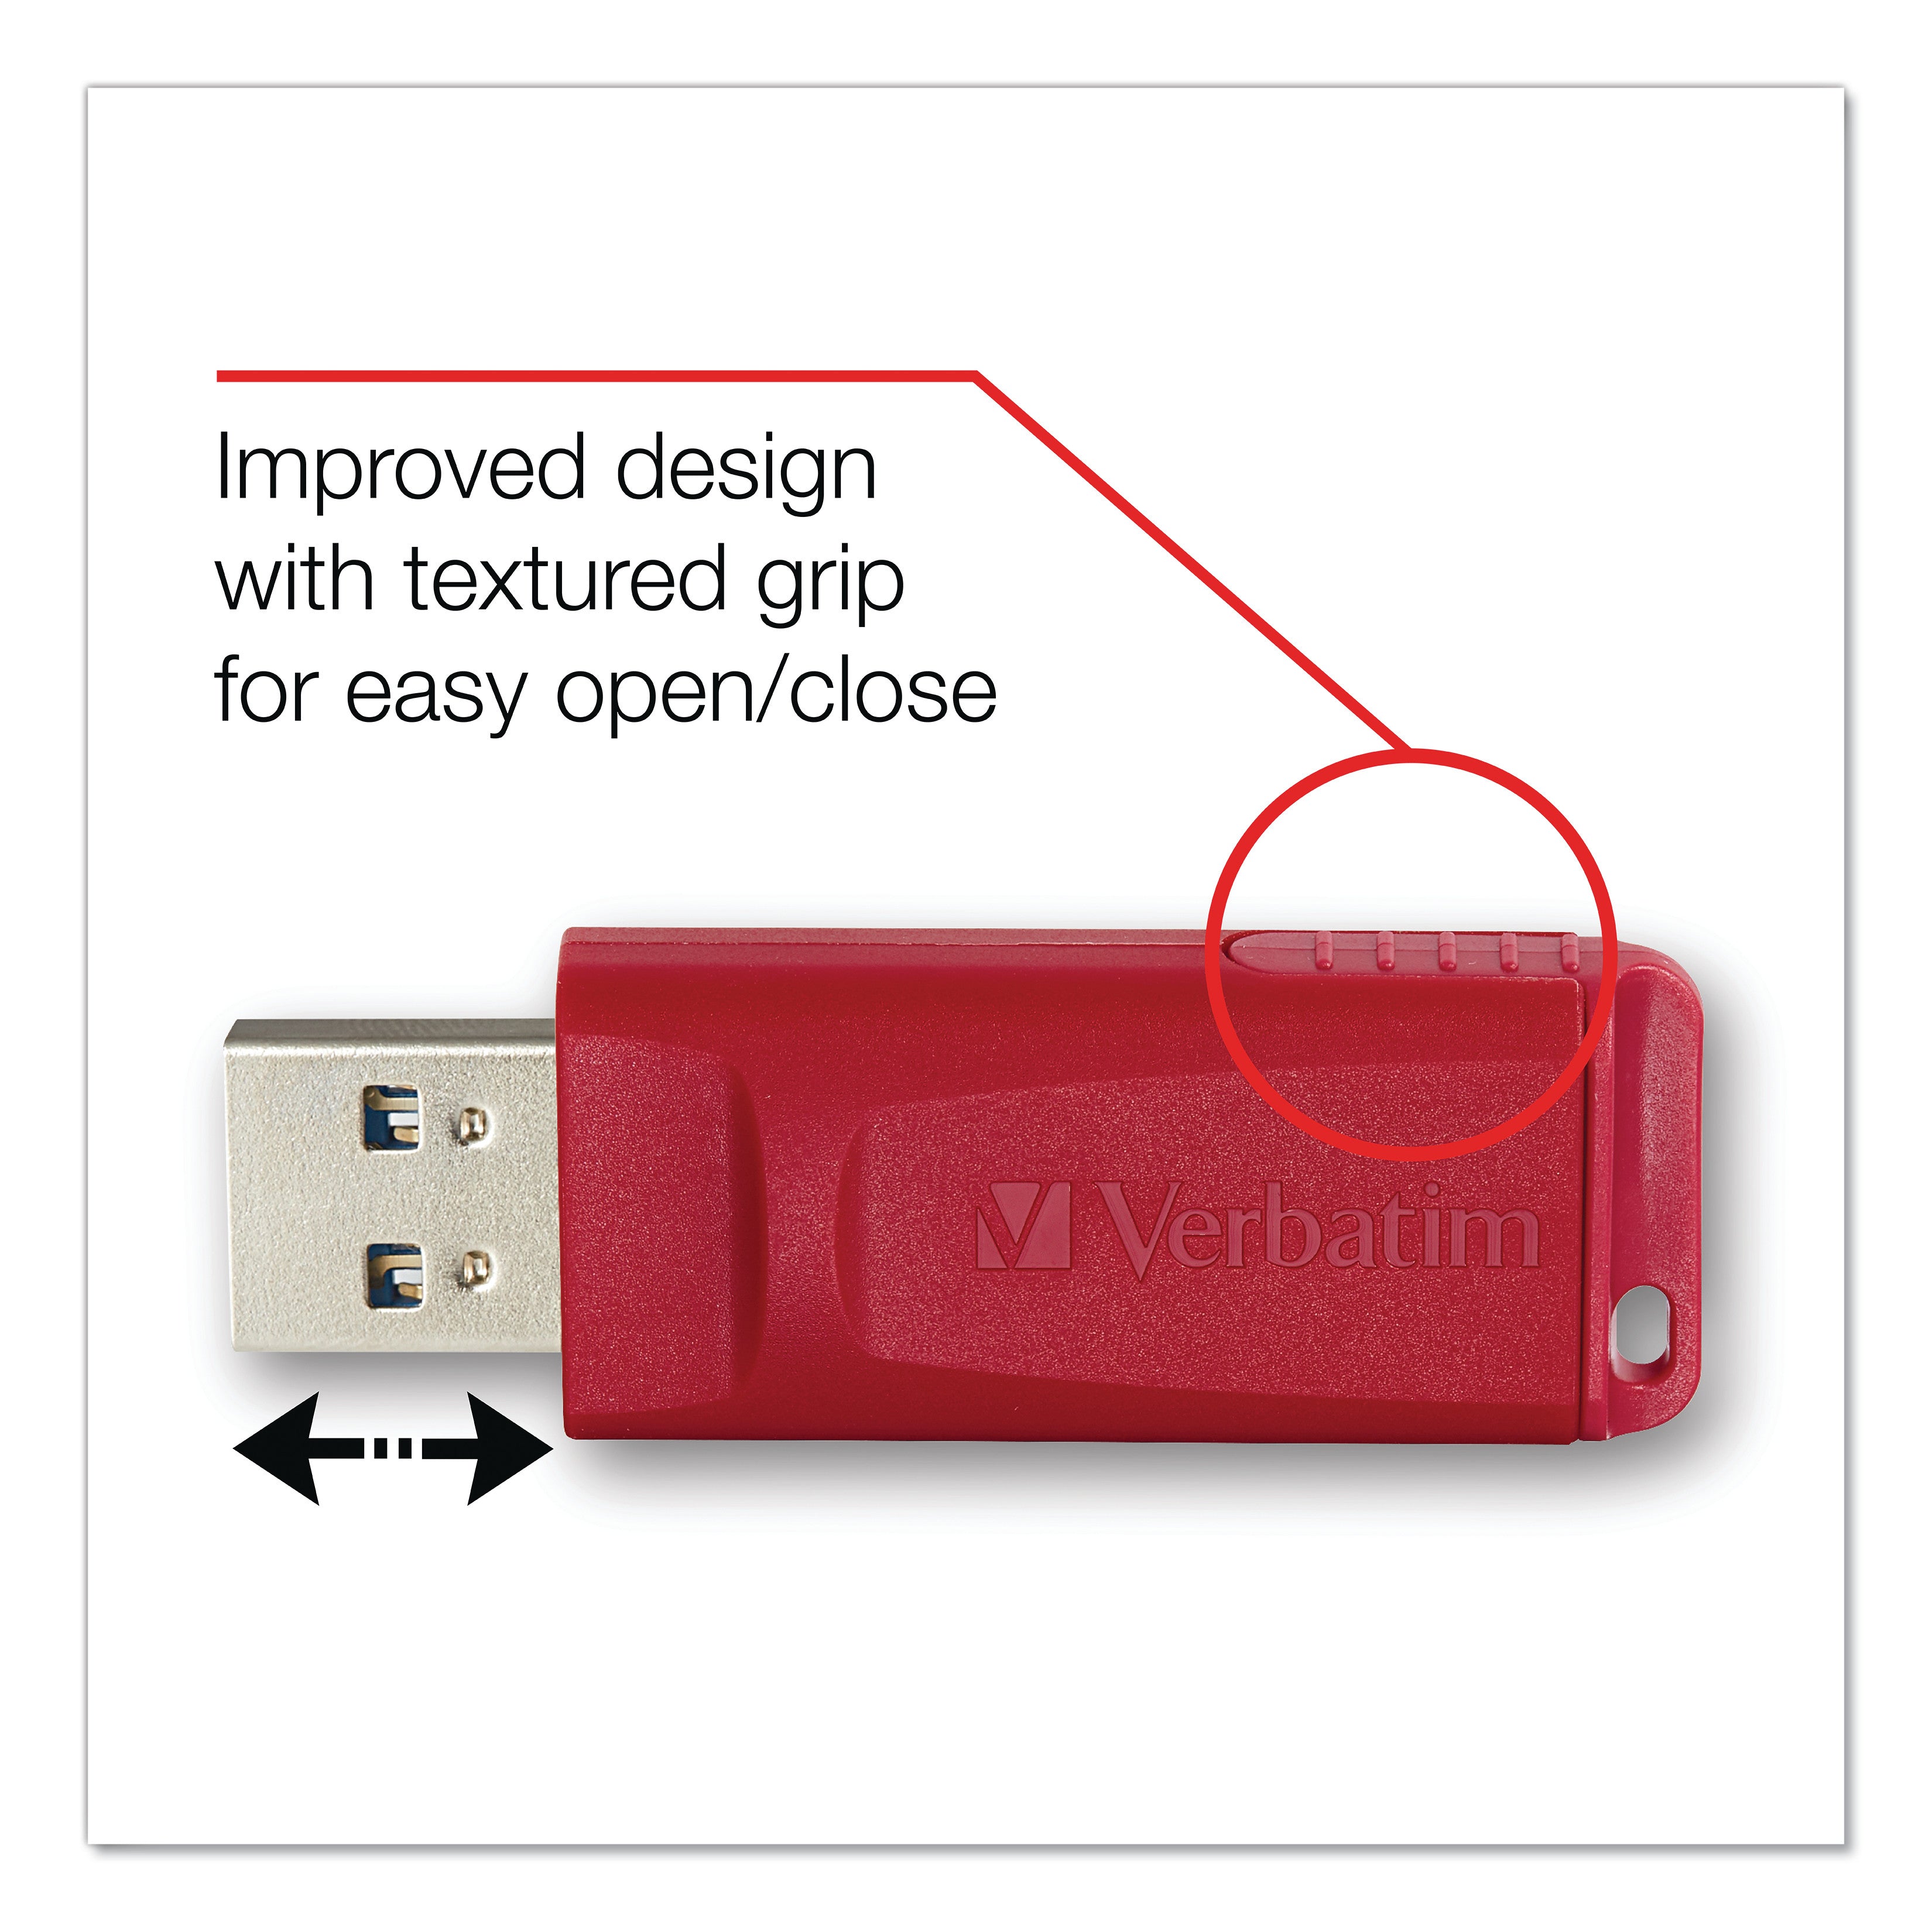 Store 'n' Go USB Flash Drive, 64 GB, Red - 